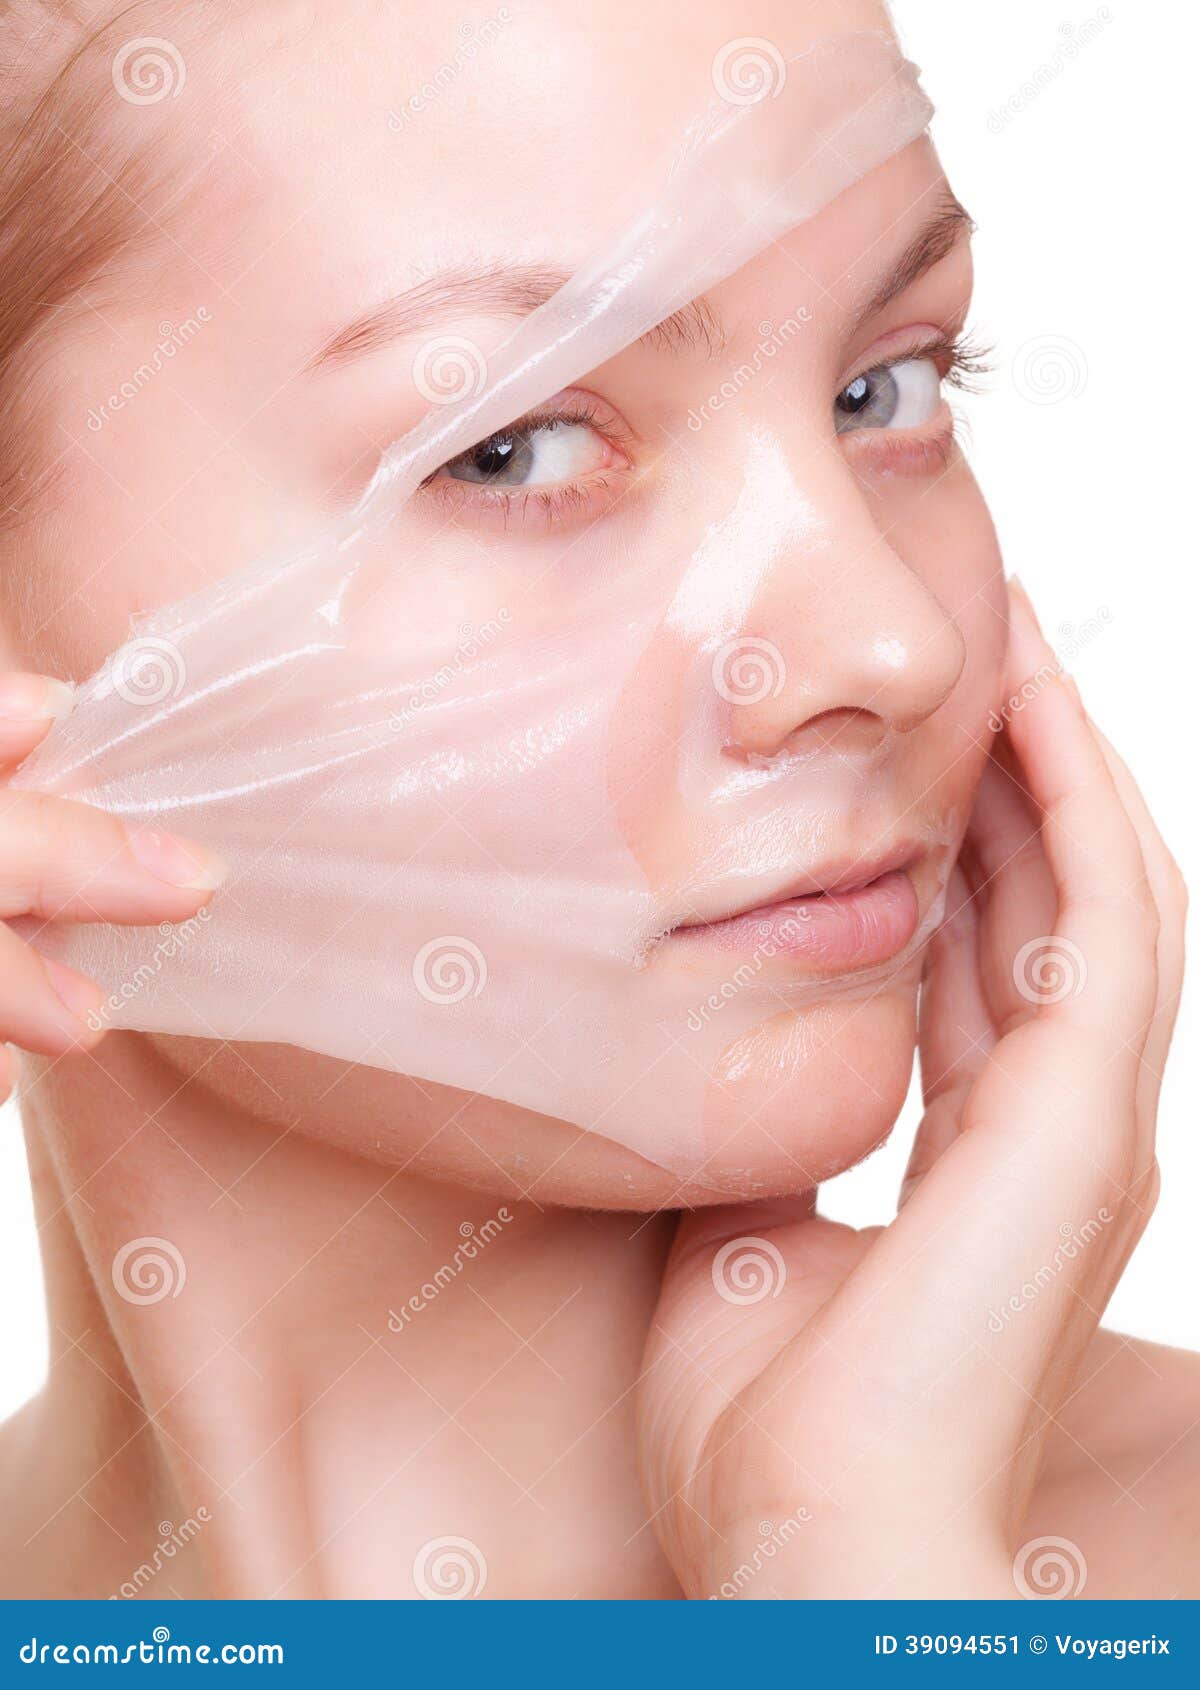 Girl Woman In Facial Peel Off Mask Skin Care Stock Image Image Of Face Skin 39094551